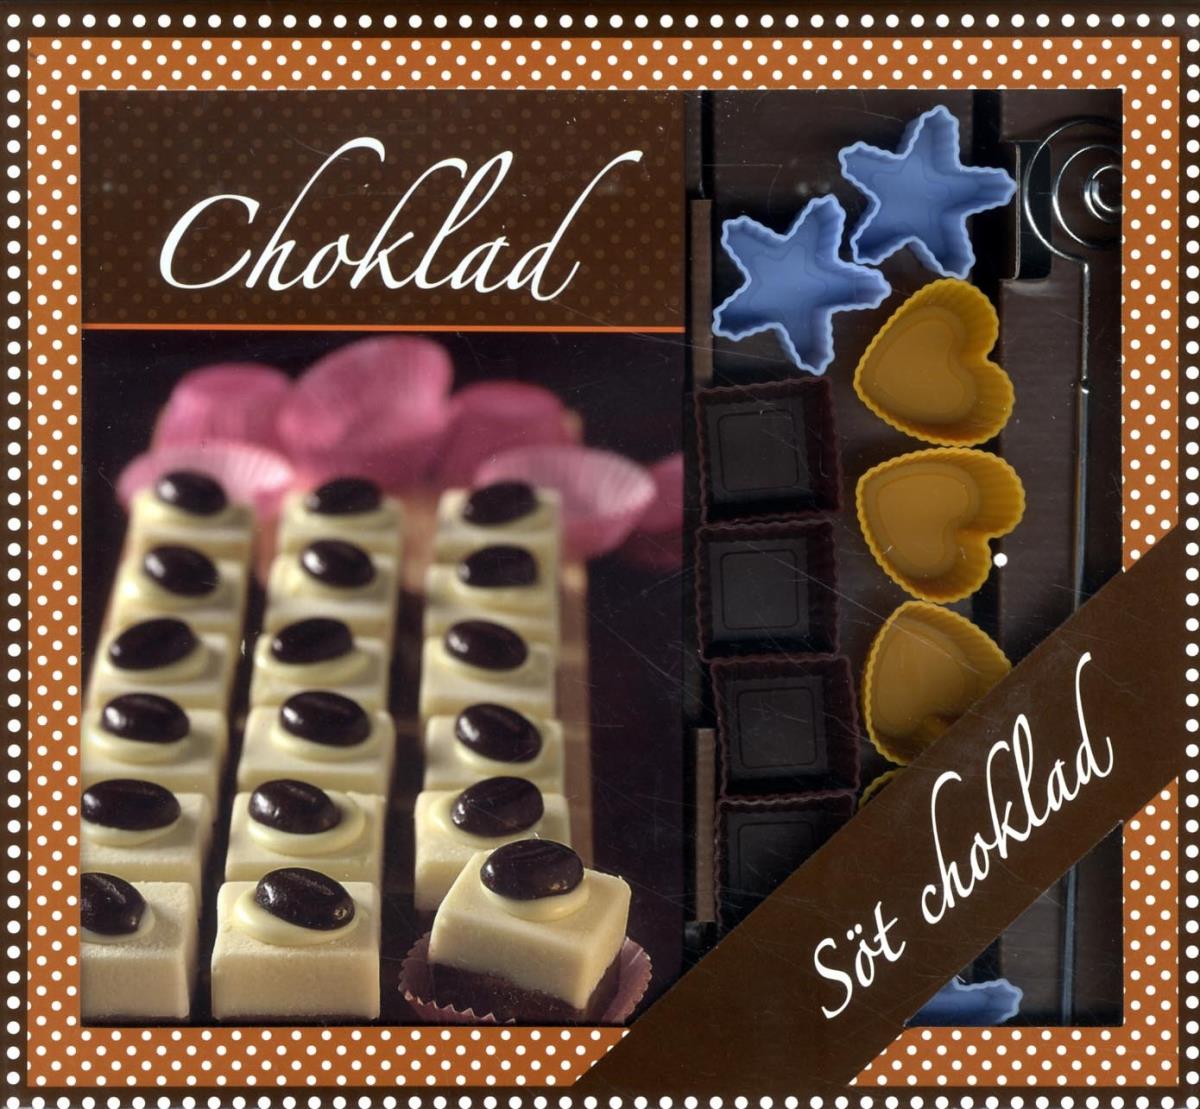 Choklad Box - Bok, 12 Pralinformar & Doppspiraler